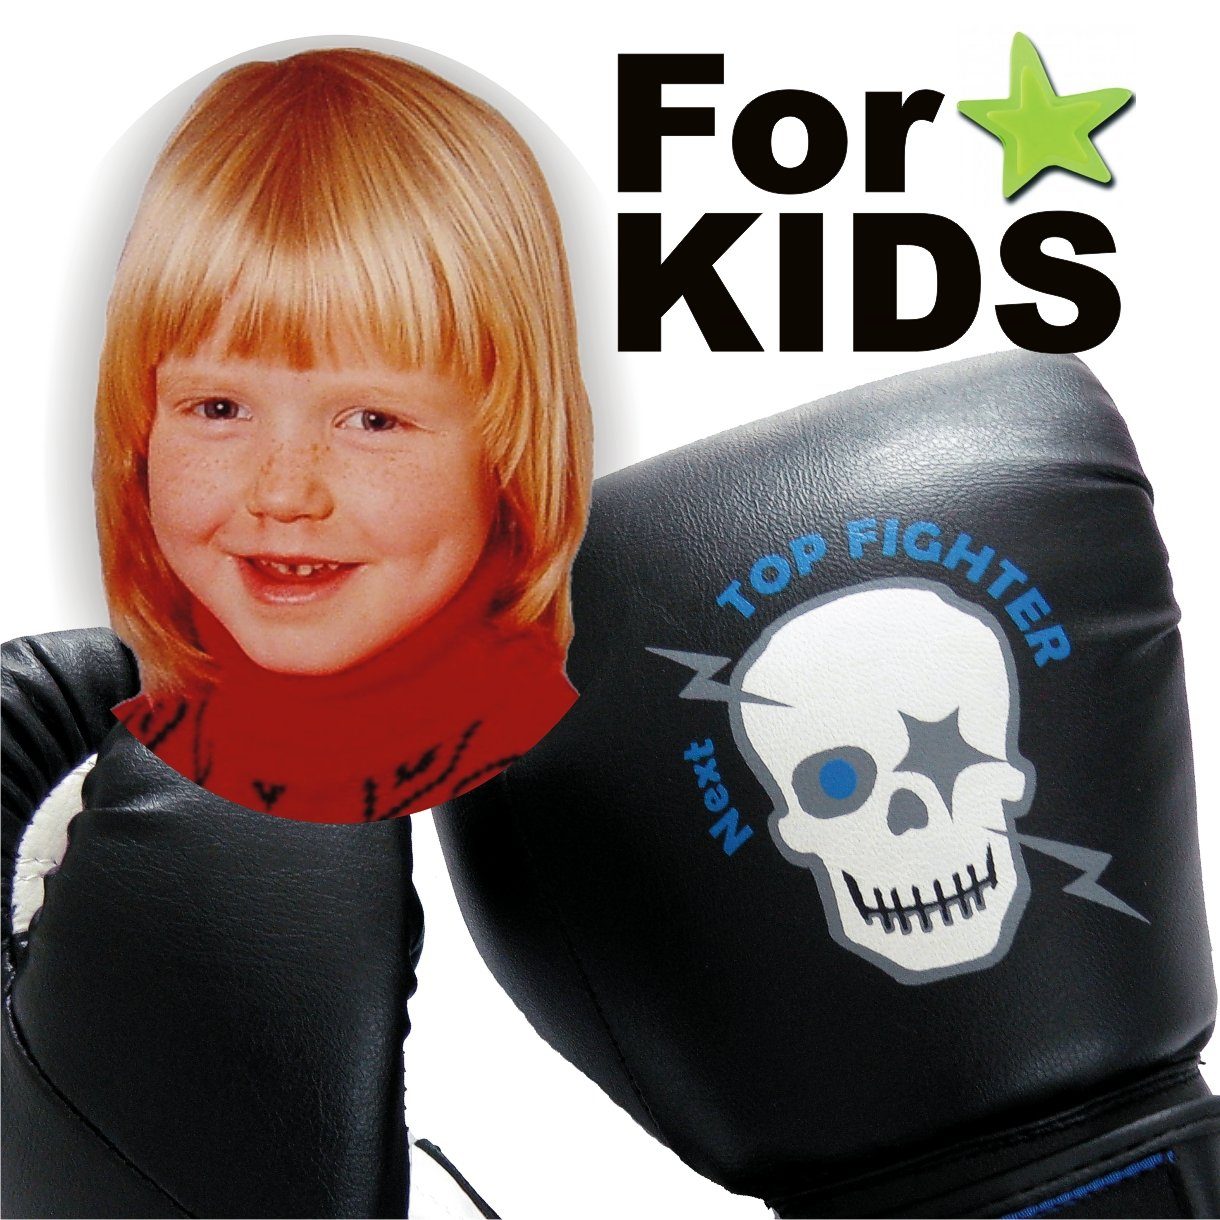 Skull Boxhandschuhe Kinderboxhandschuhe Totenkopf BAY-Sports Kids